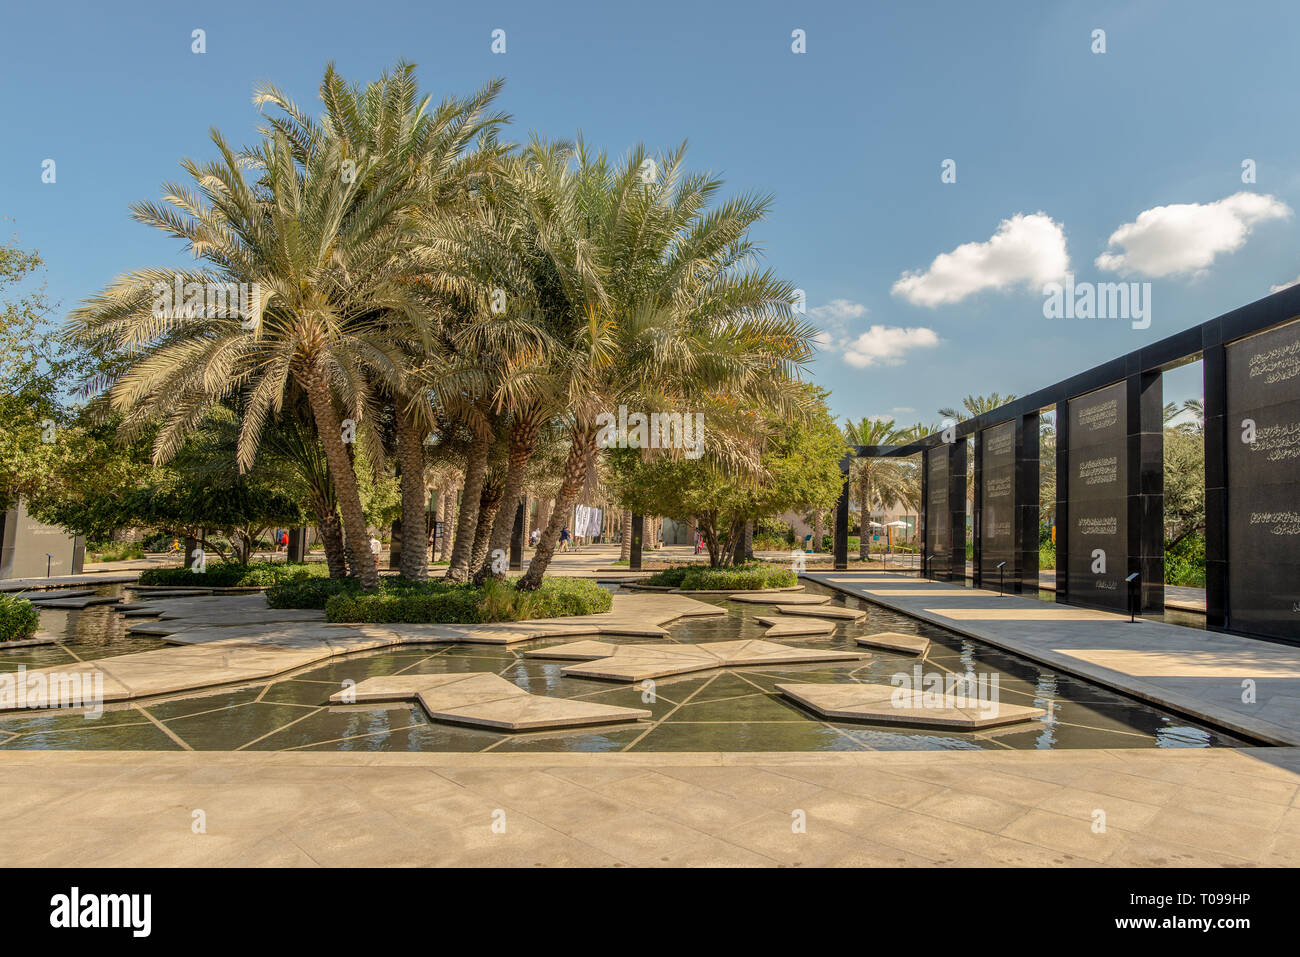 Clump of date trees and memorial, Umm Al Emarat Park, Abu Dhabi, United Arab Emirates Stock Photo